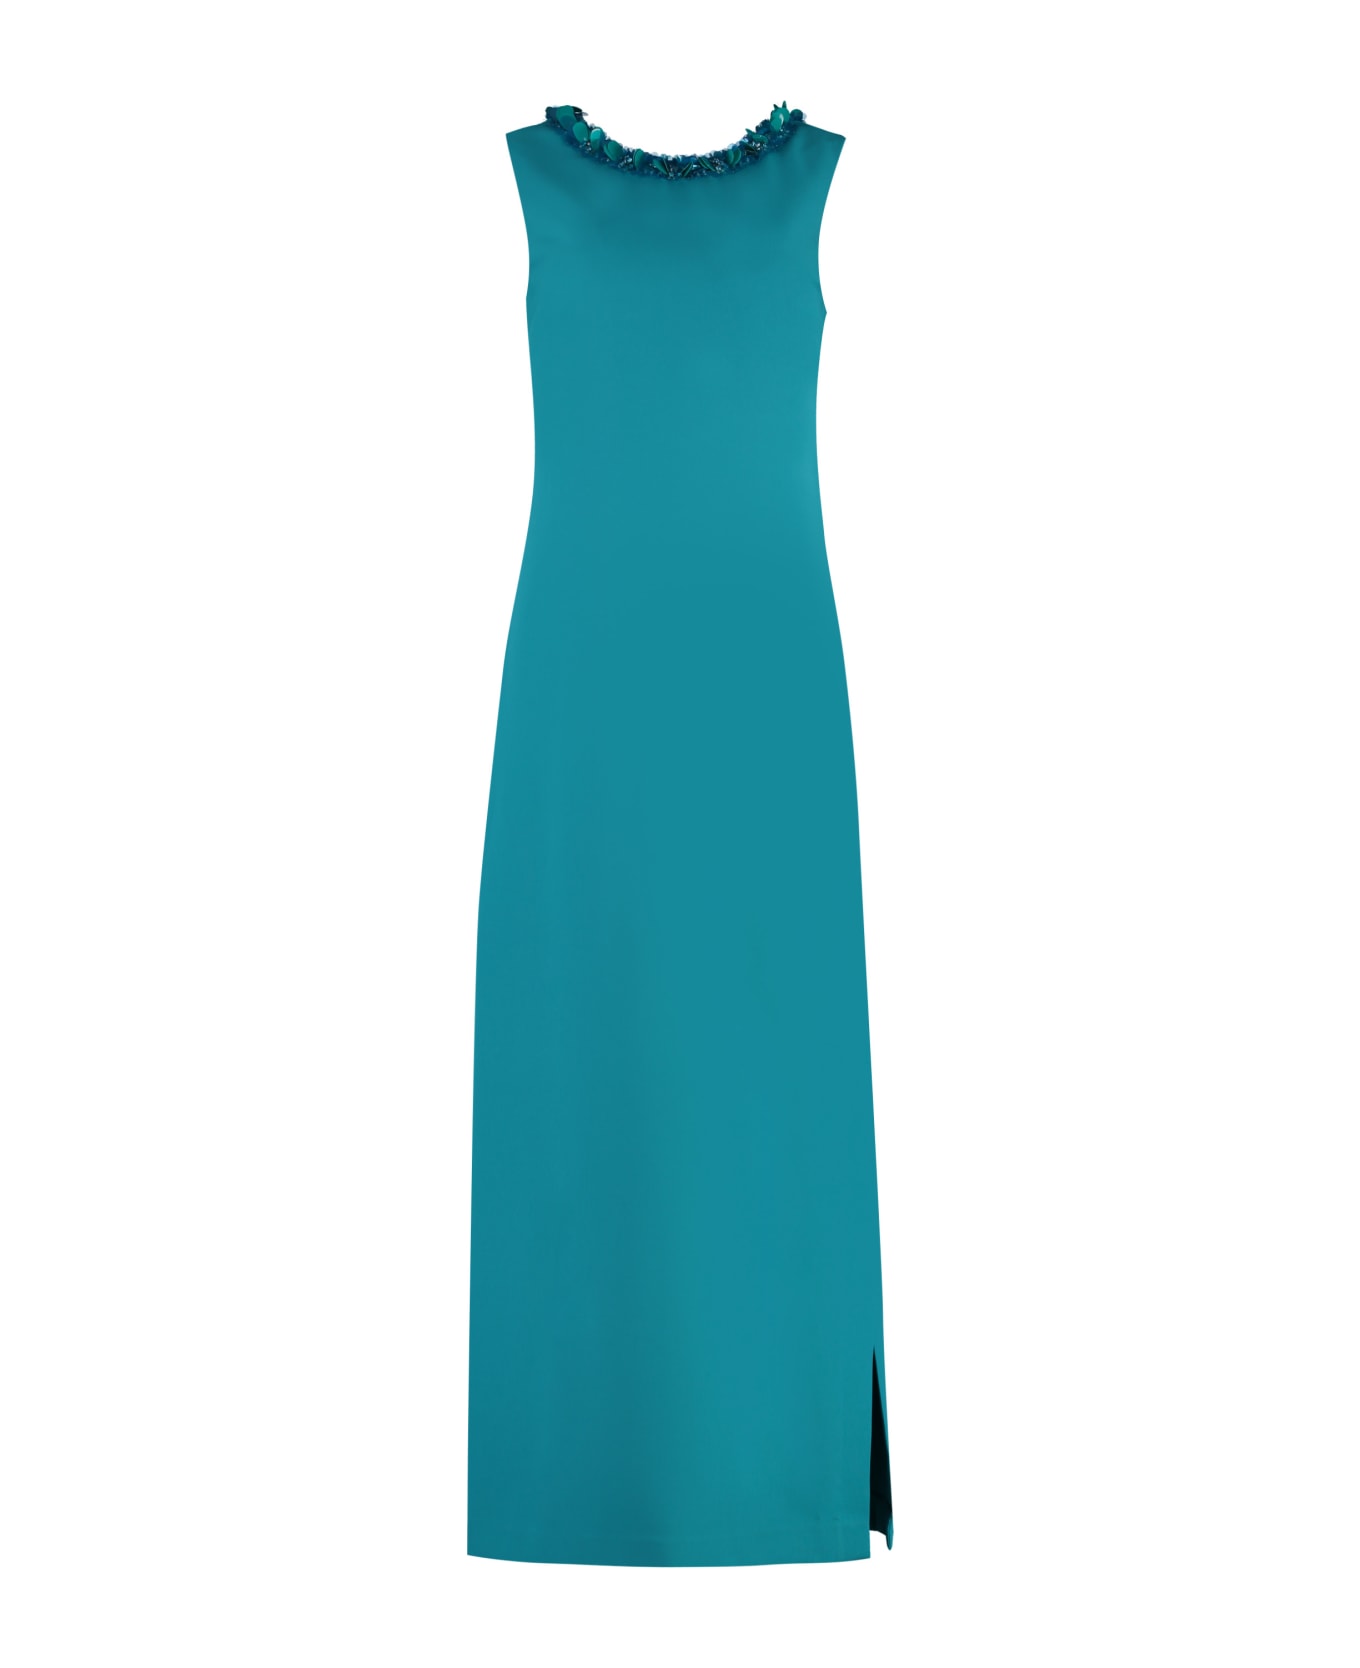 Parosh Floral Applications Dress - turquoise